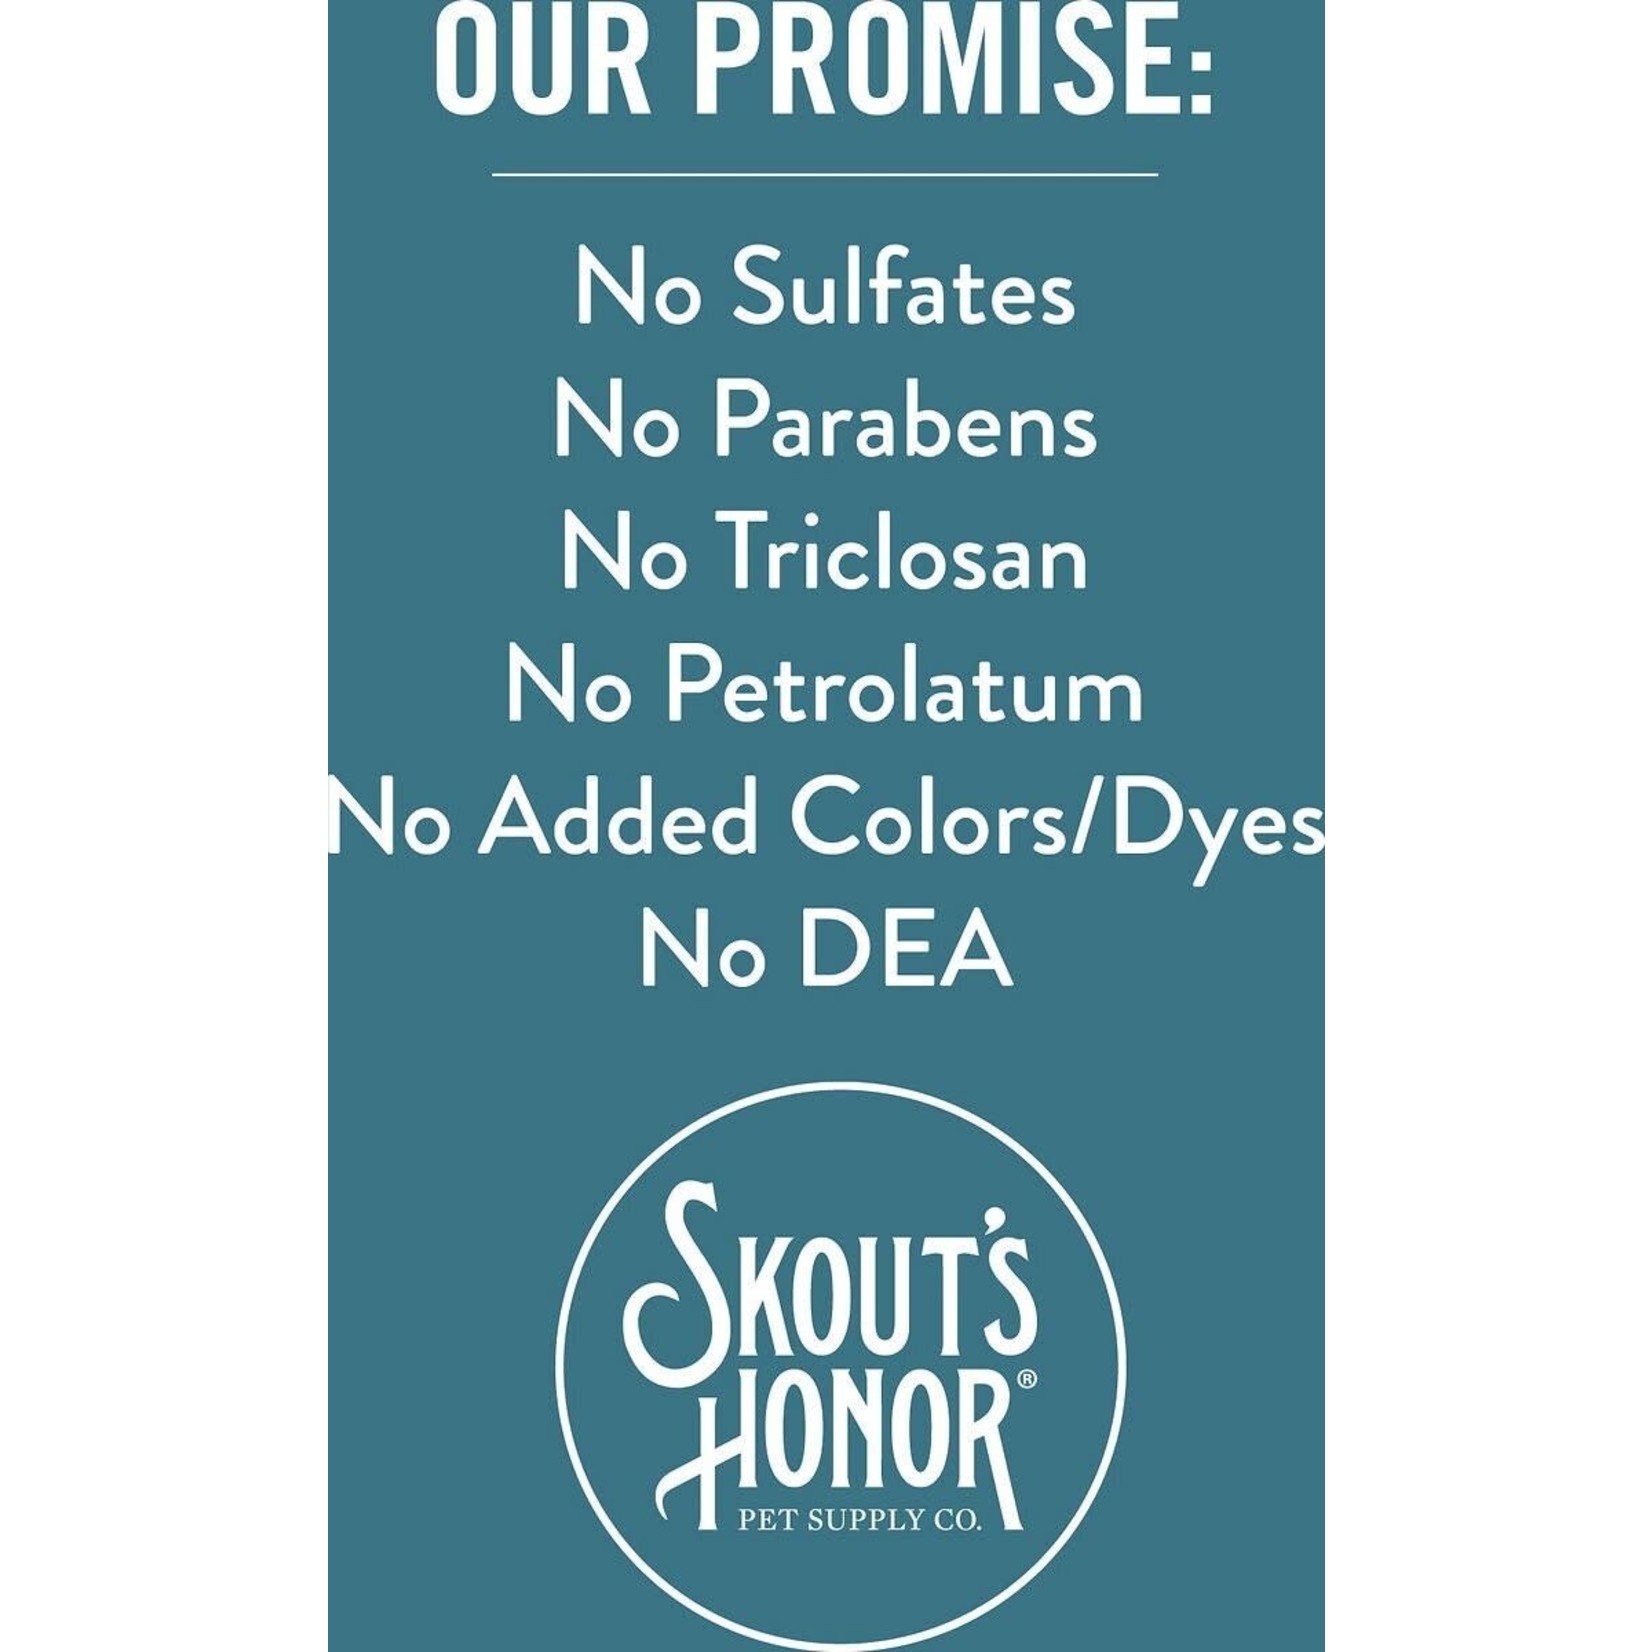 Skout's Honor Skout’s Honor: Probiotic Deodorizer: Fragrance Free 8oz